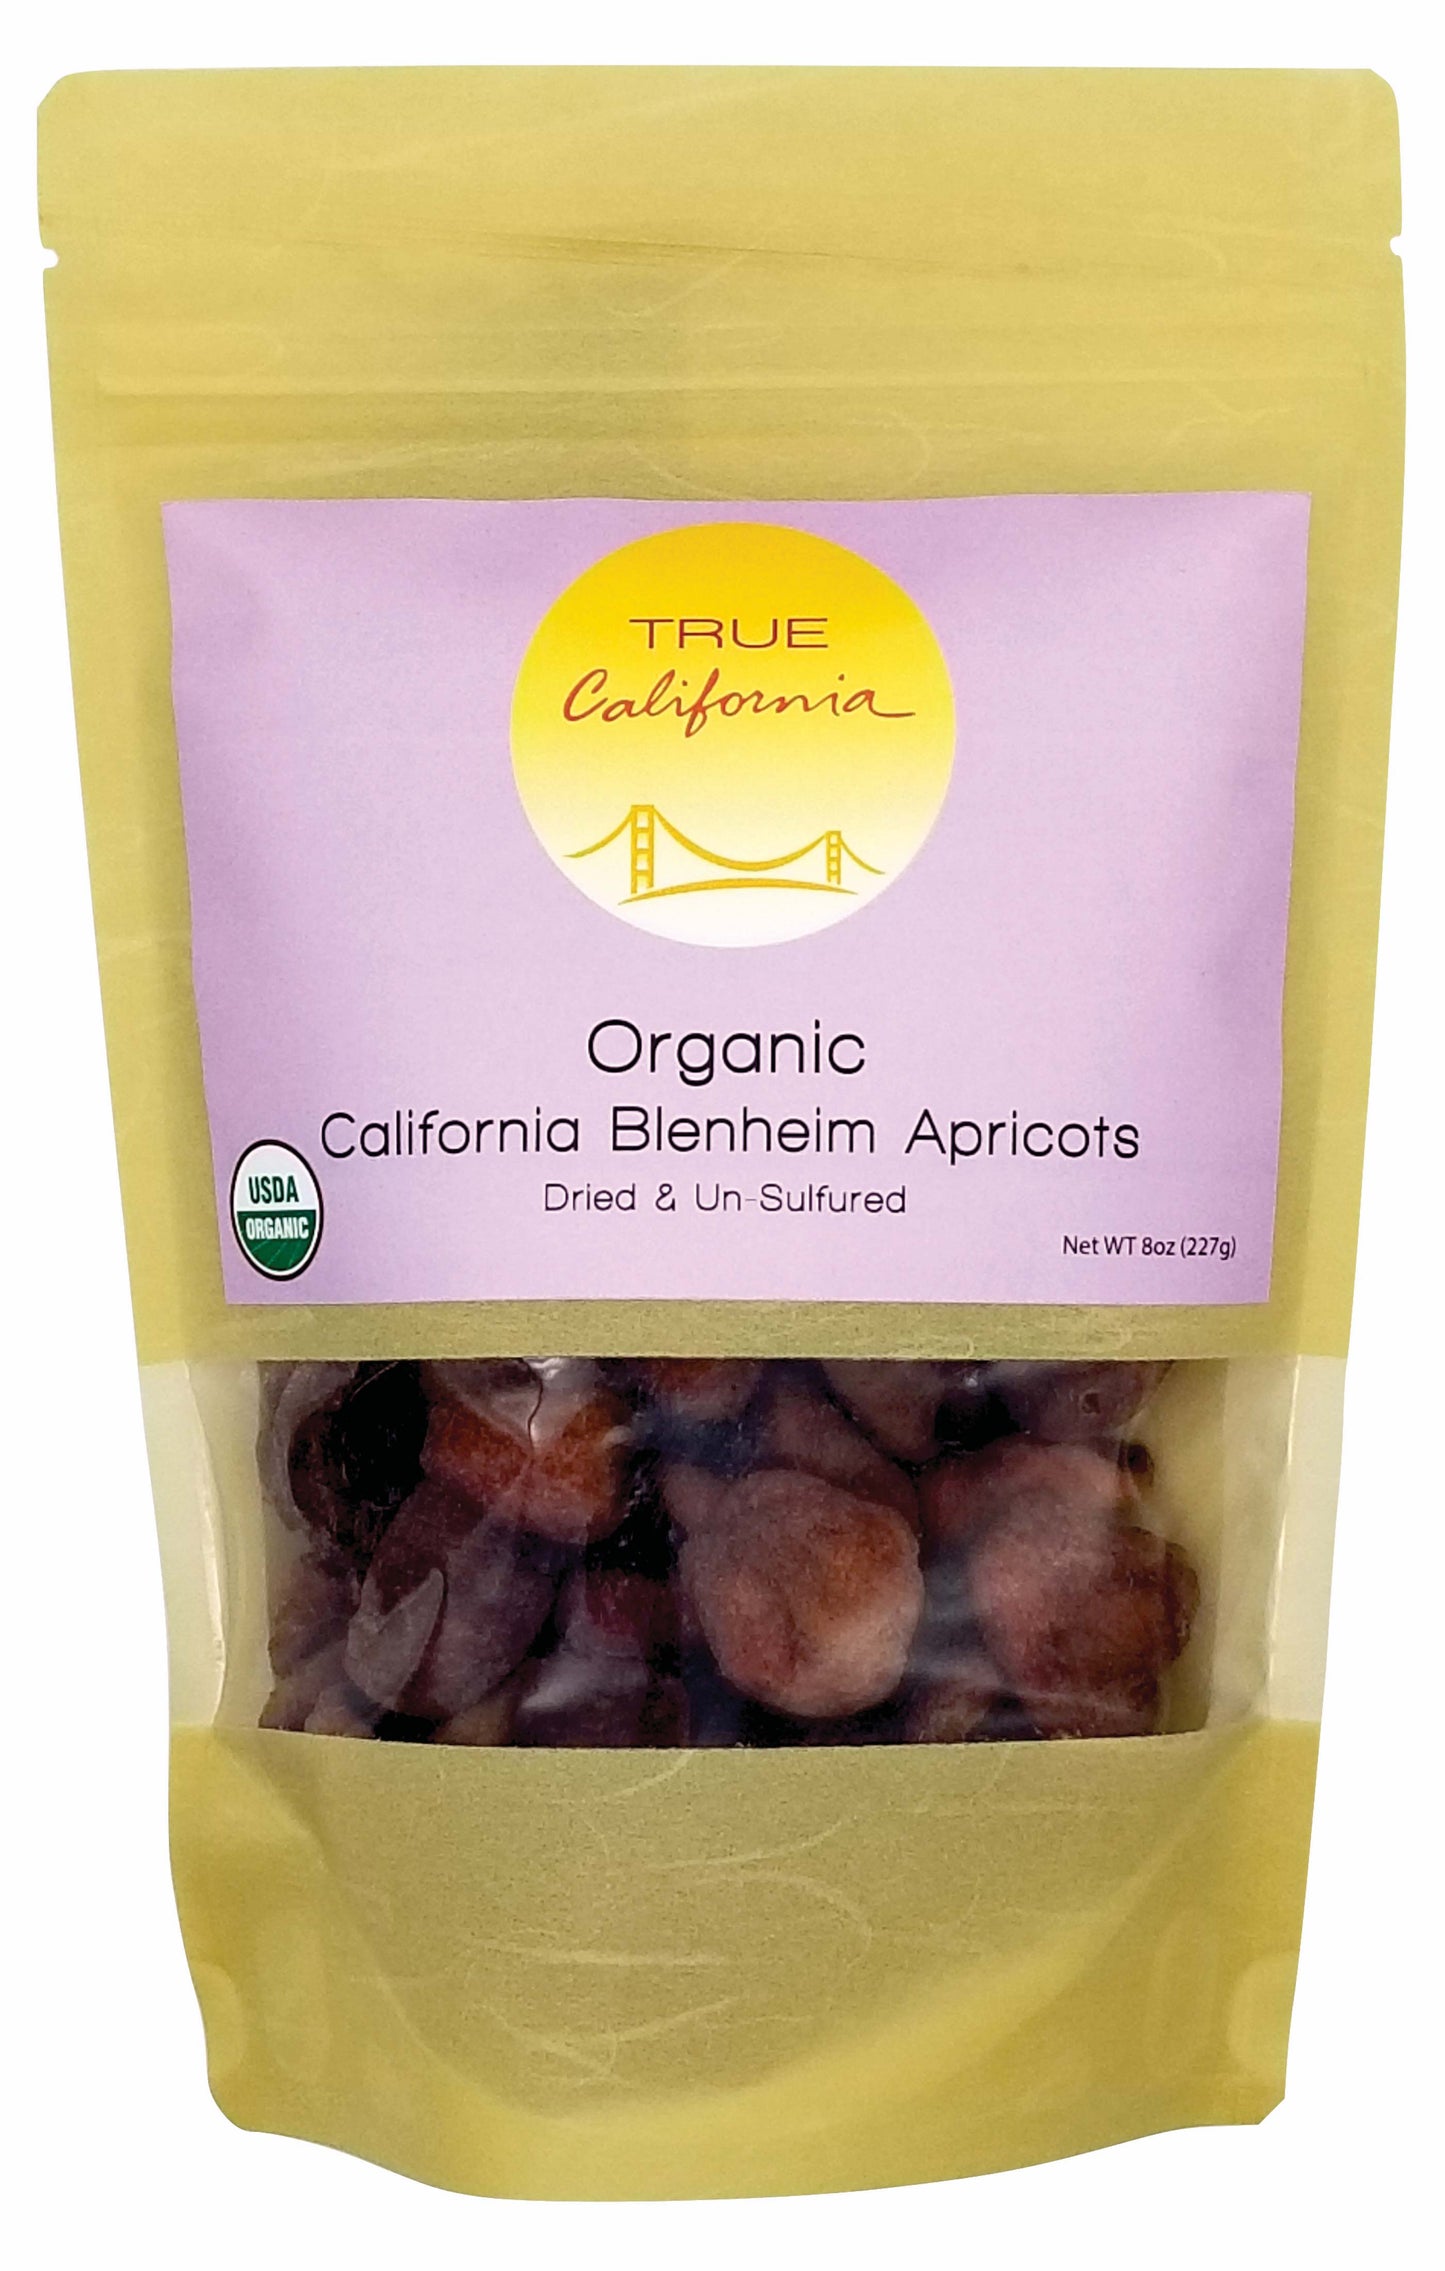 True California Organic Dried Blenheim Apricots in an 8oz package